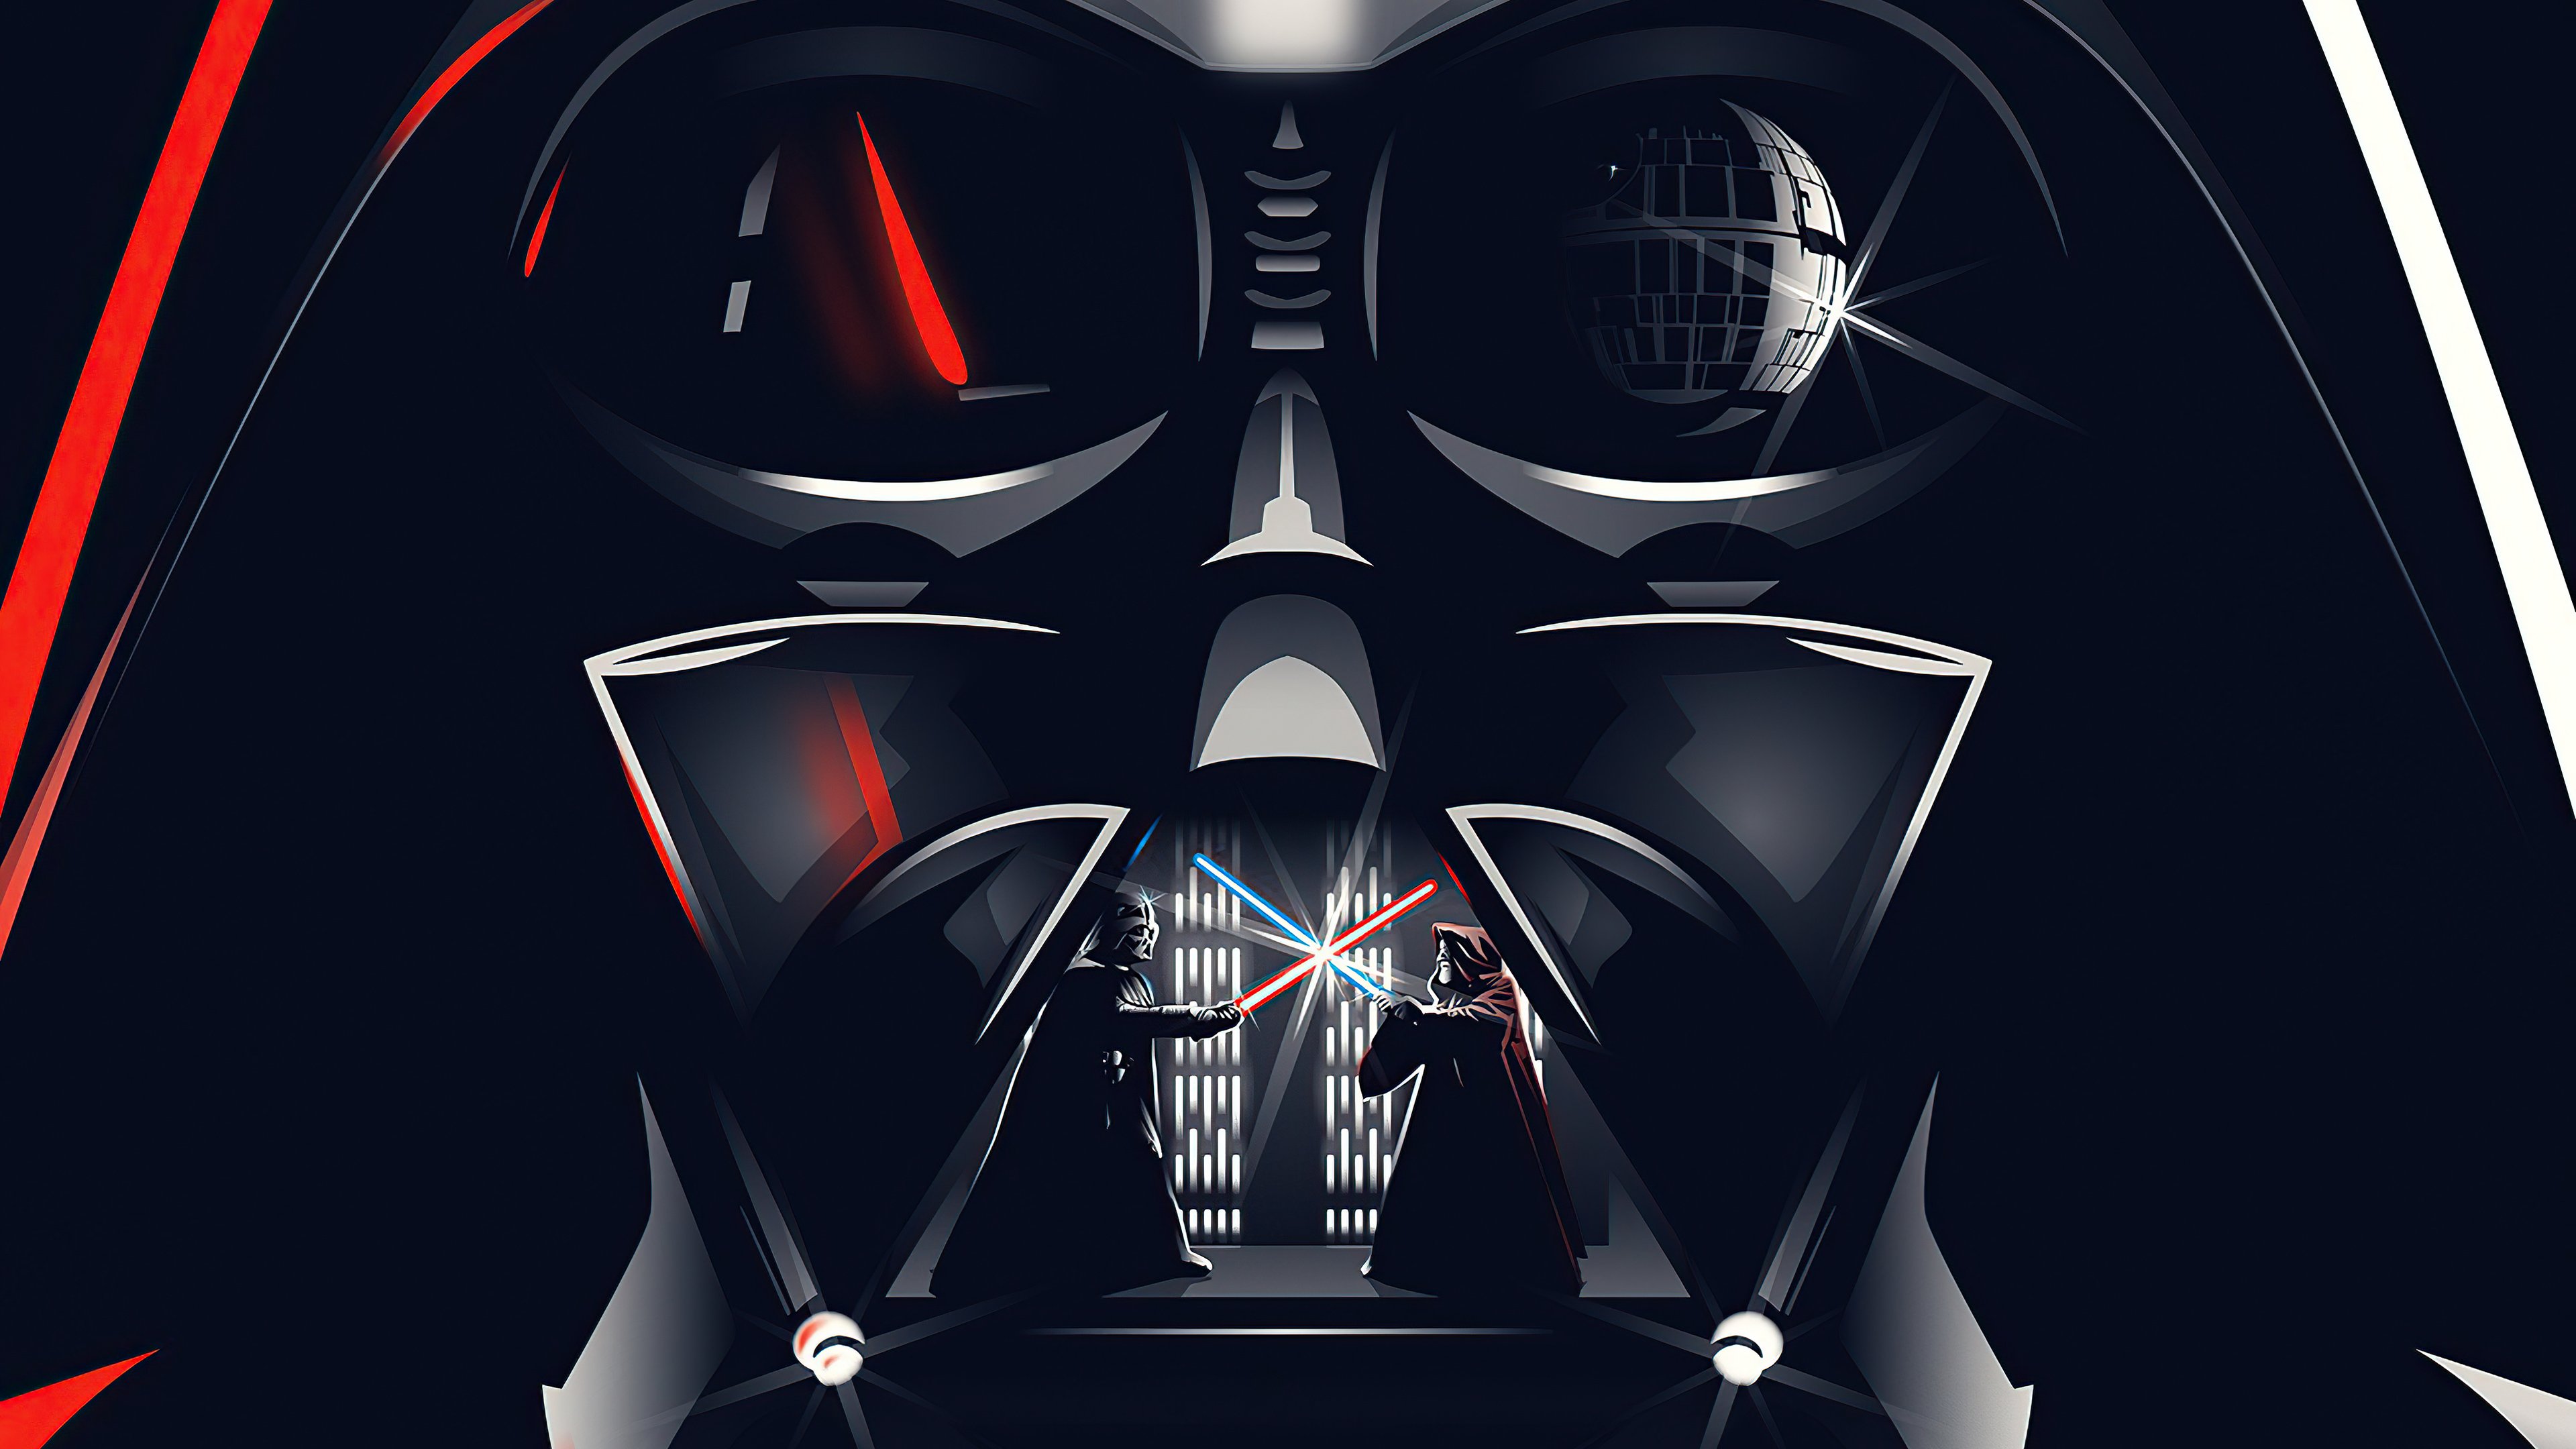 Darth Vader Star Wars Fight Wallpaper 4k Ultra HD ID:10673